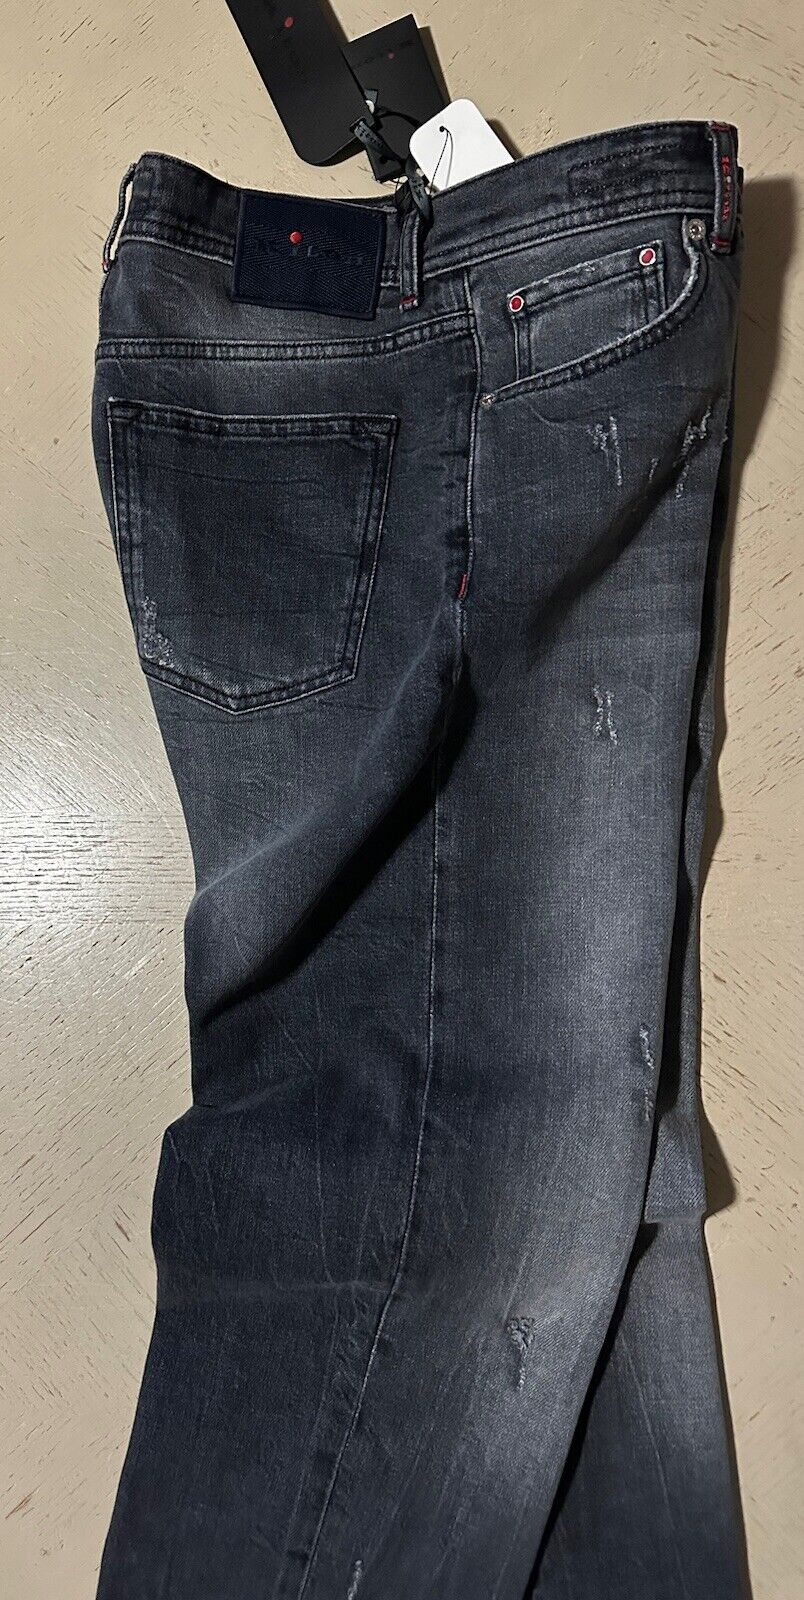 NWT $1695 Kiton Men Limited Edition Faded Jeans Pants Black 32 US/48 Eu